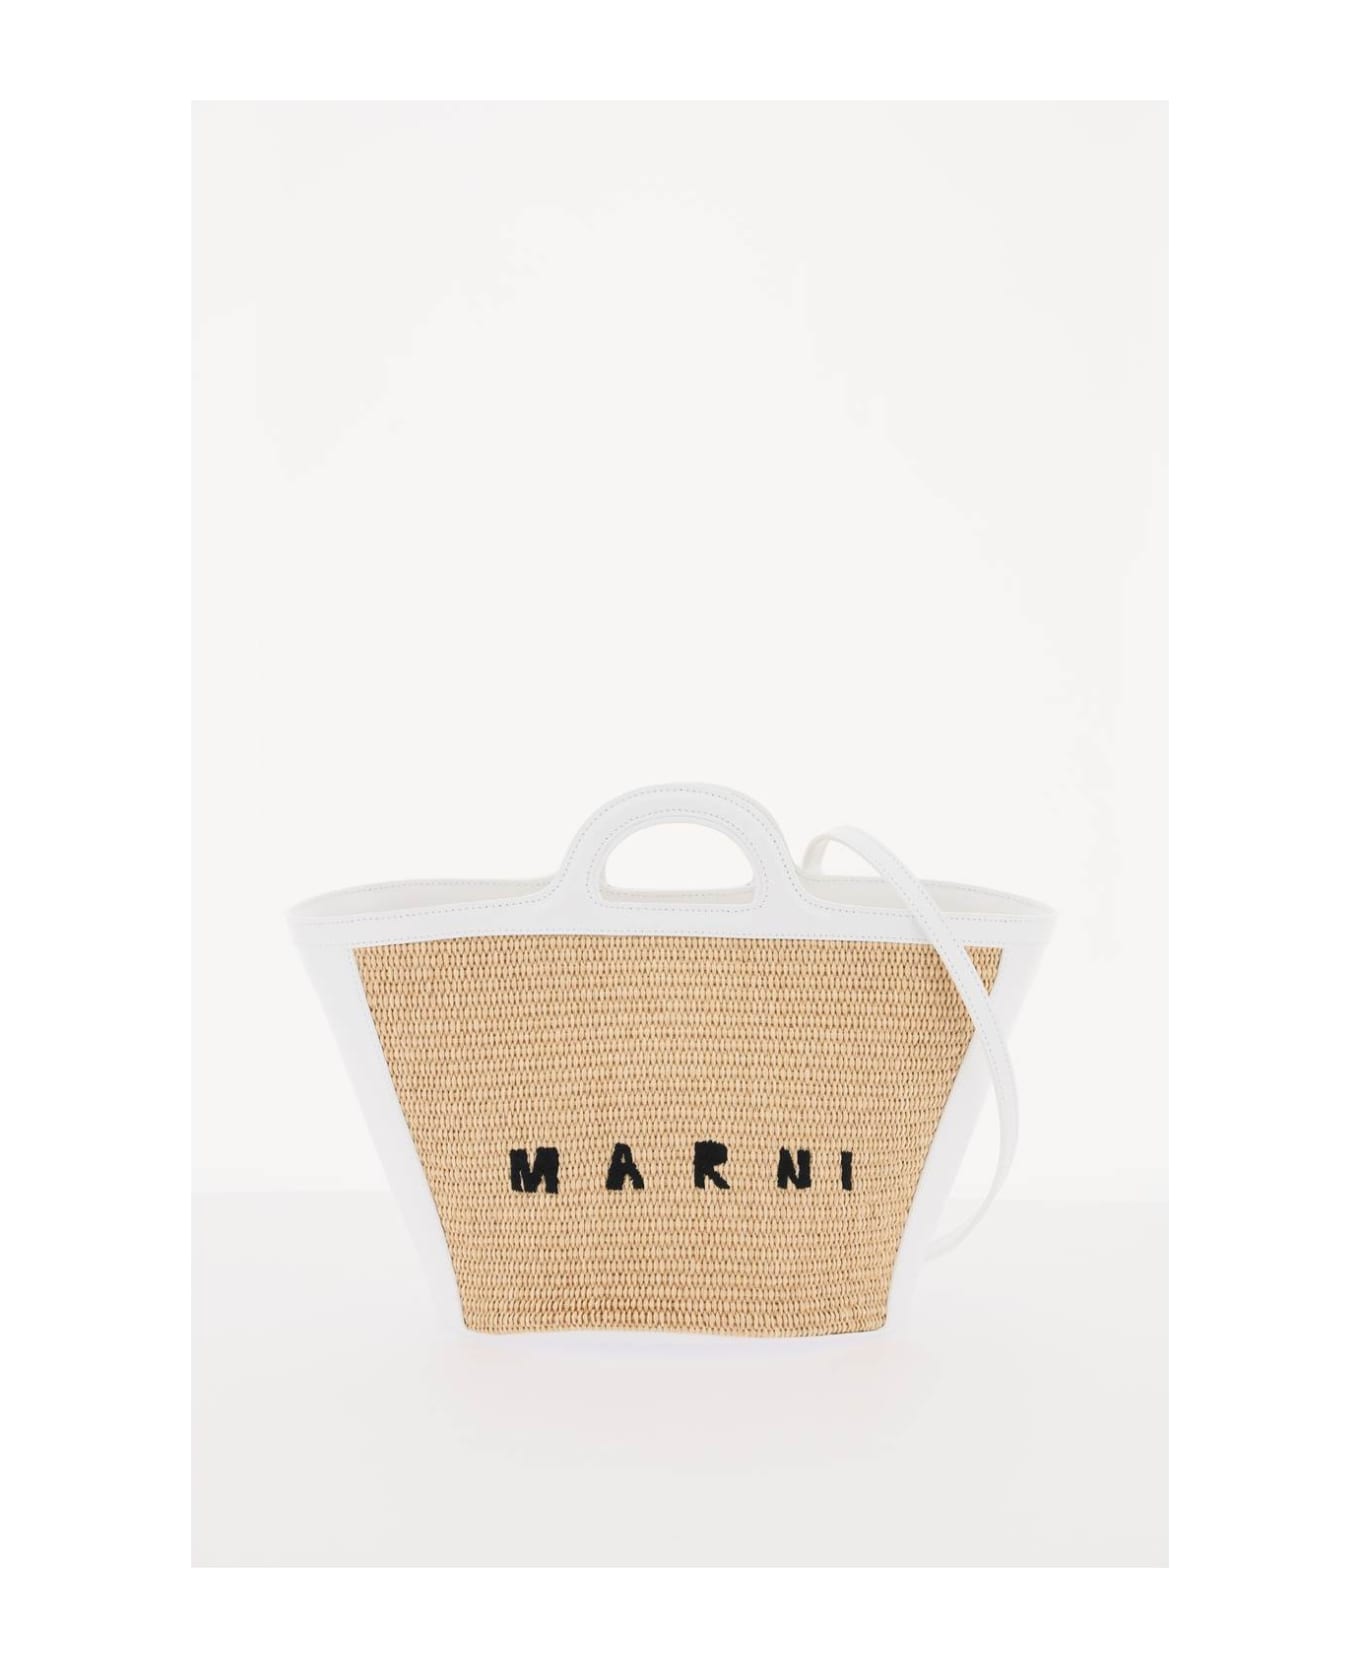 Marni Small Tropicalia Summer Bag In White Leather And Natural Raffia - White/beige